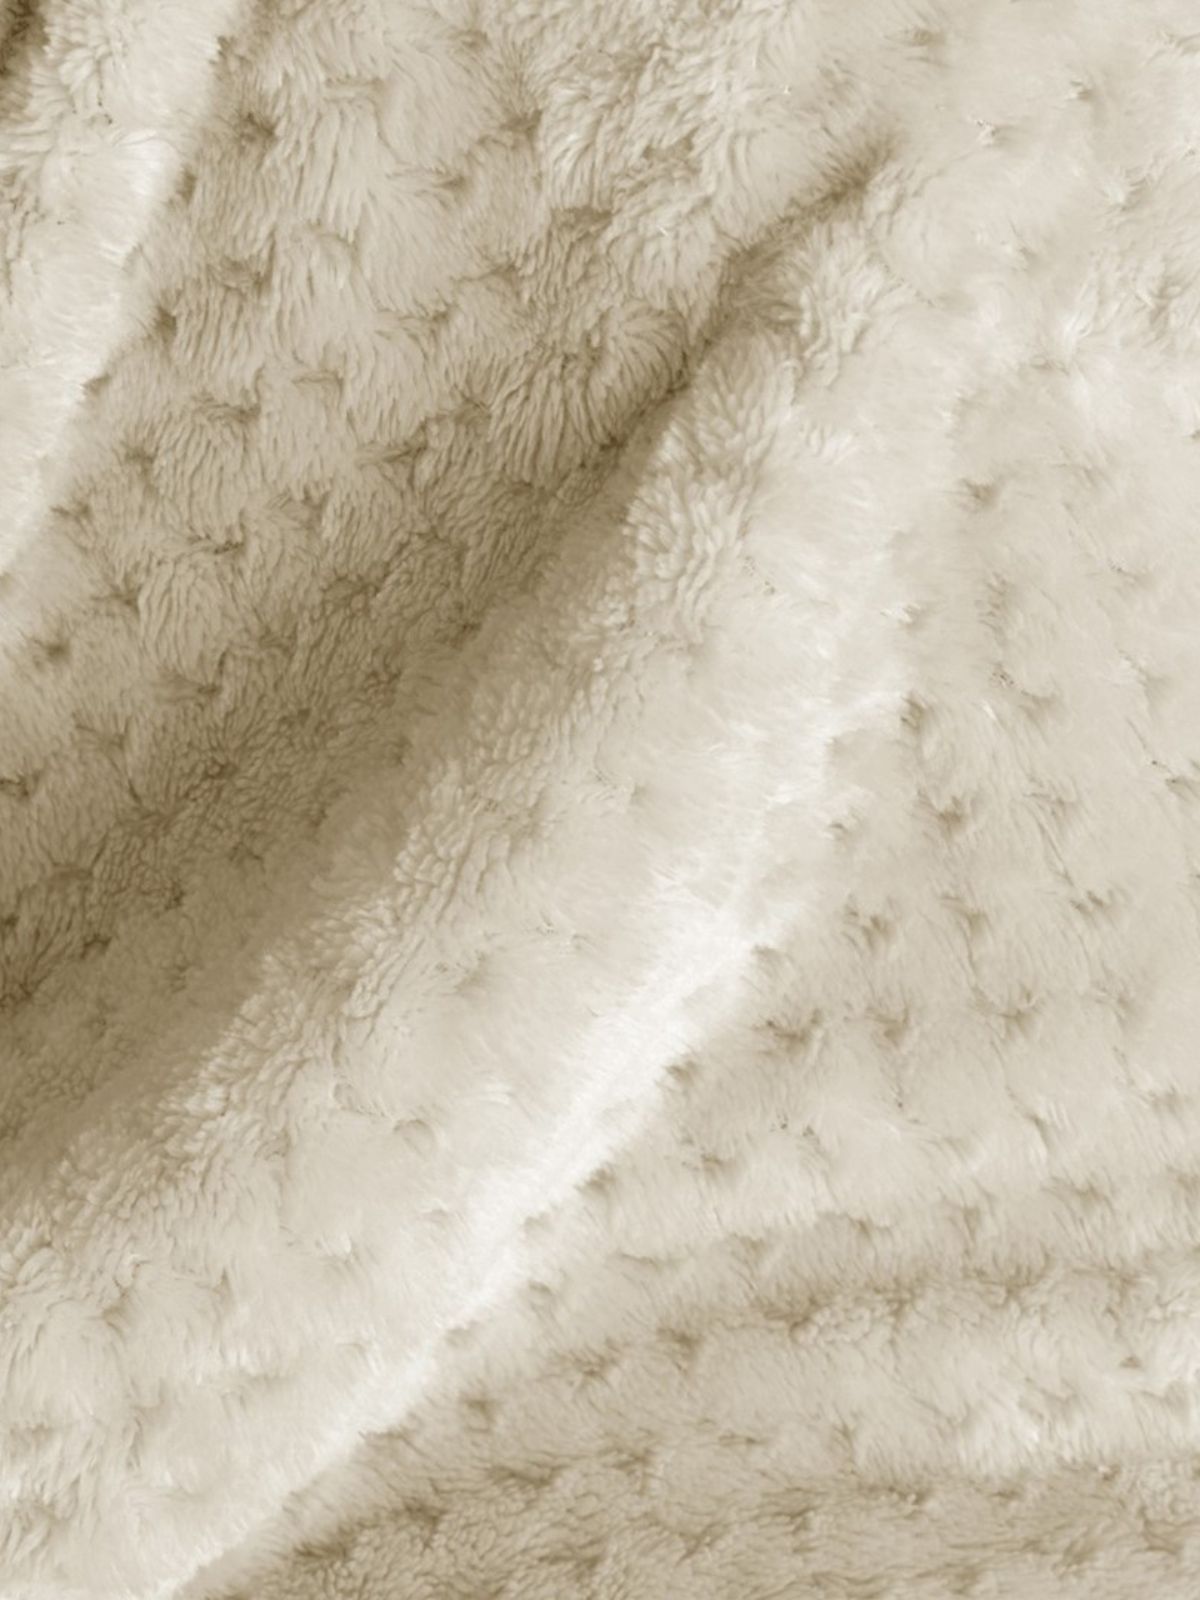 Plaid Coperta Shleepy in colore beige 70x150 cm.-5